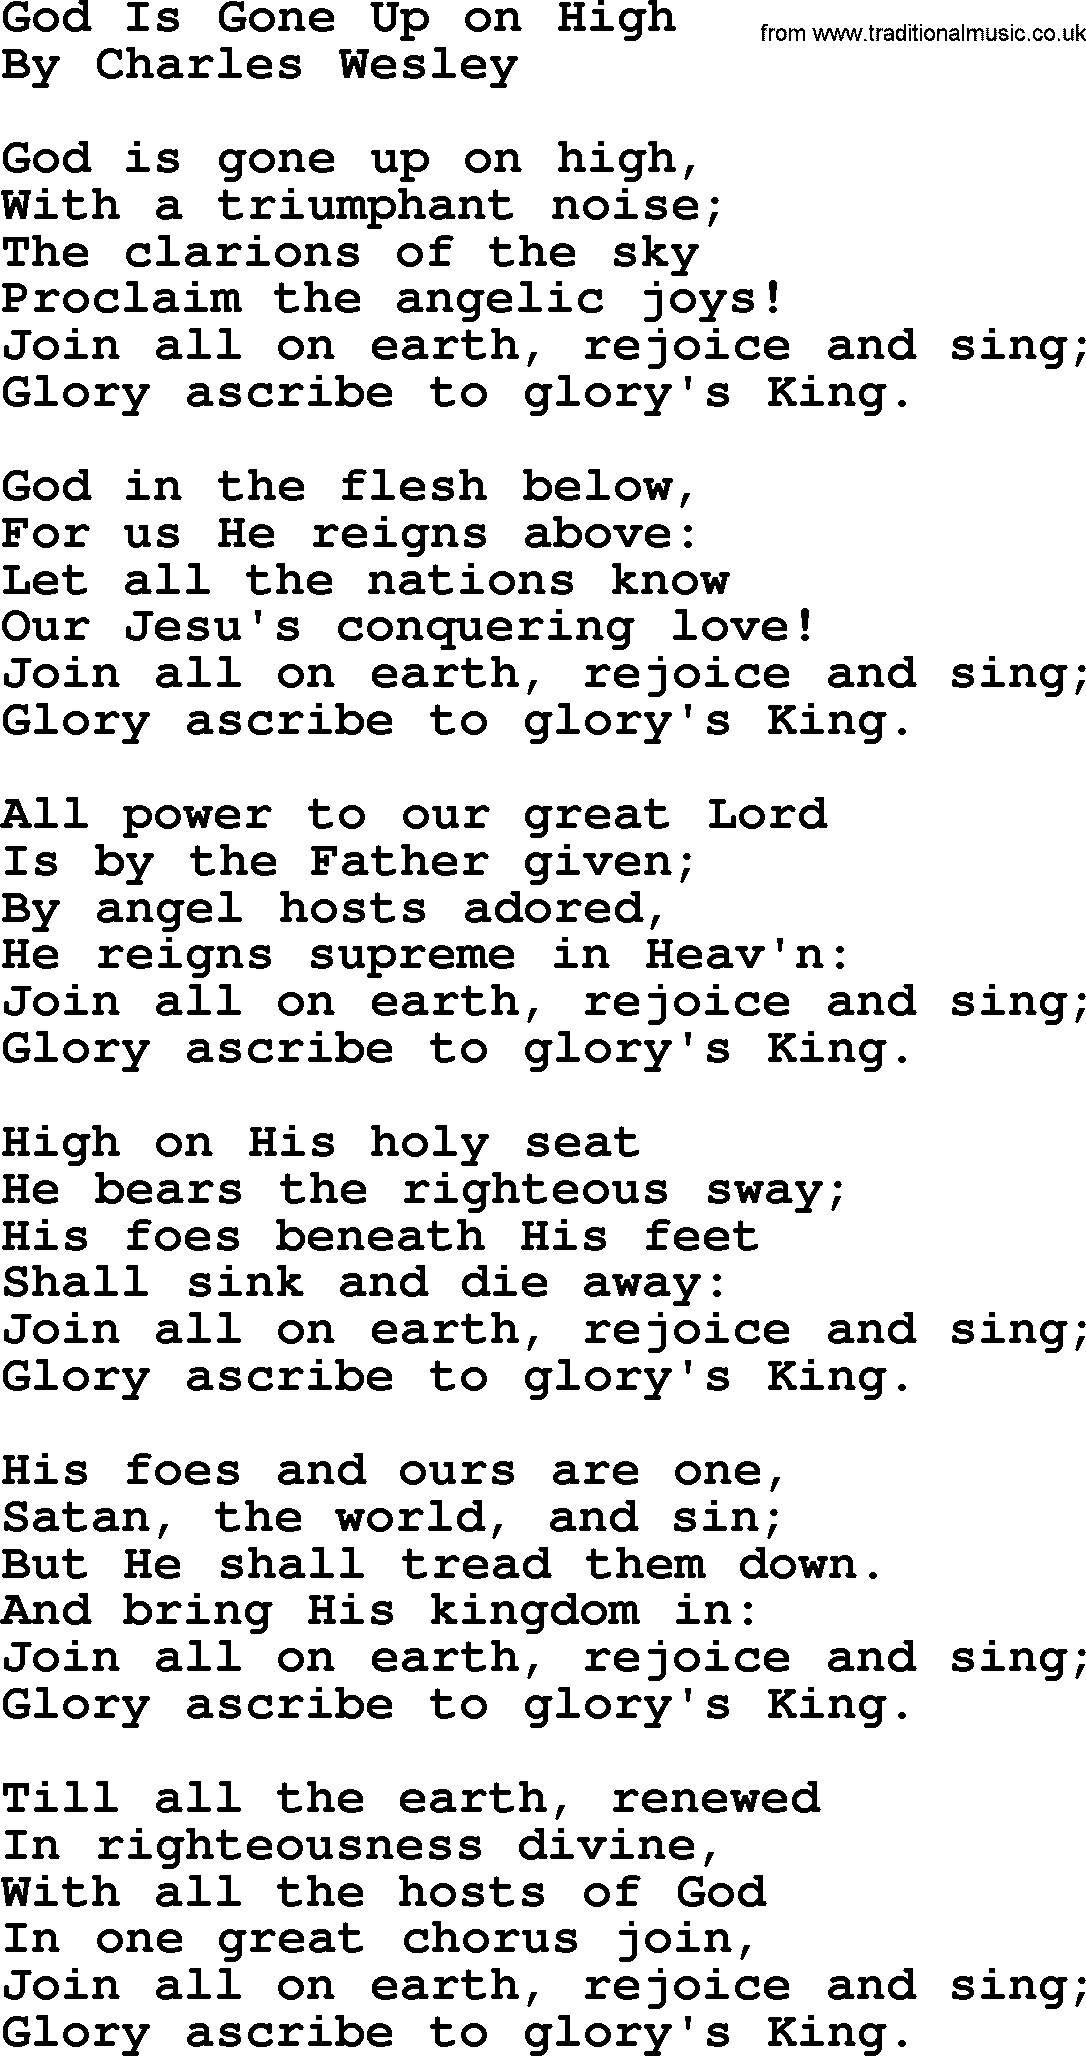 Charles Wesley hymn: God Is Gone Up On High, lyrics